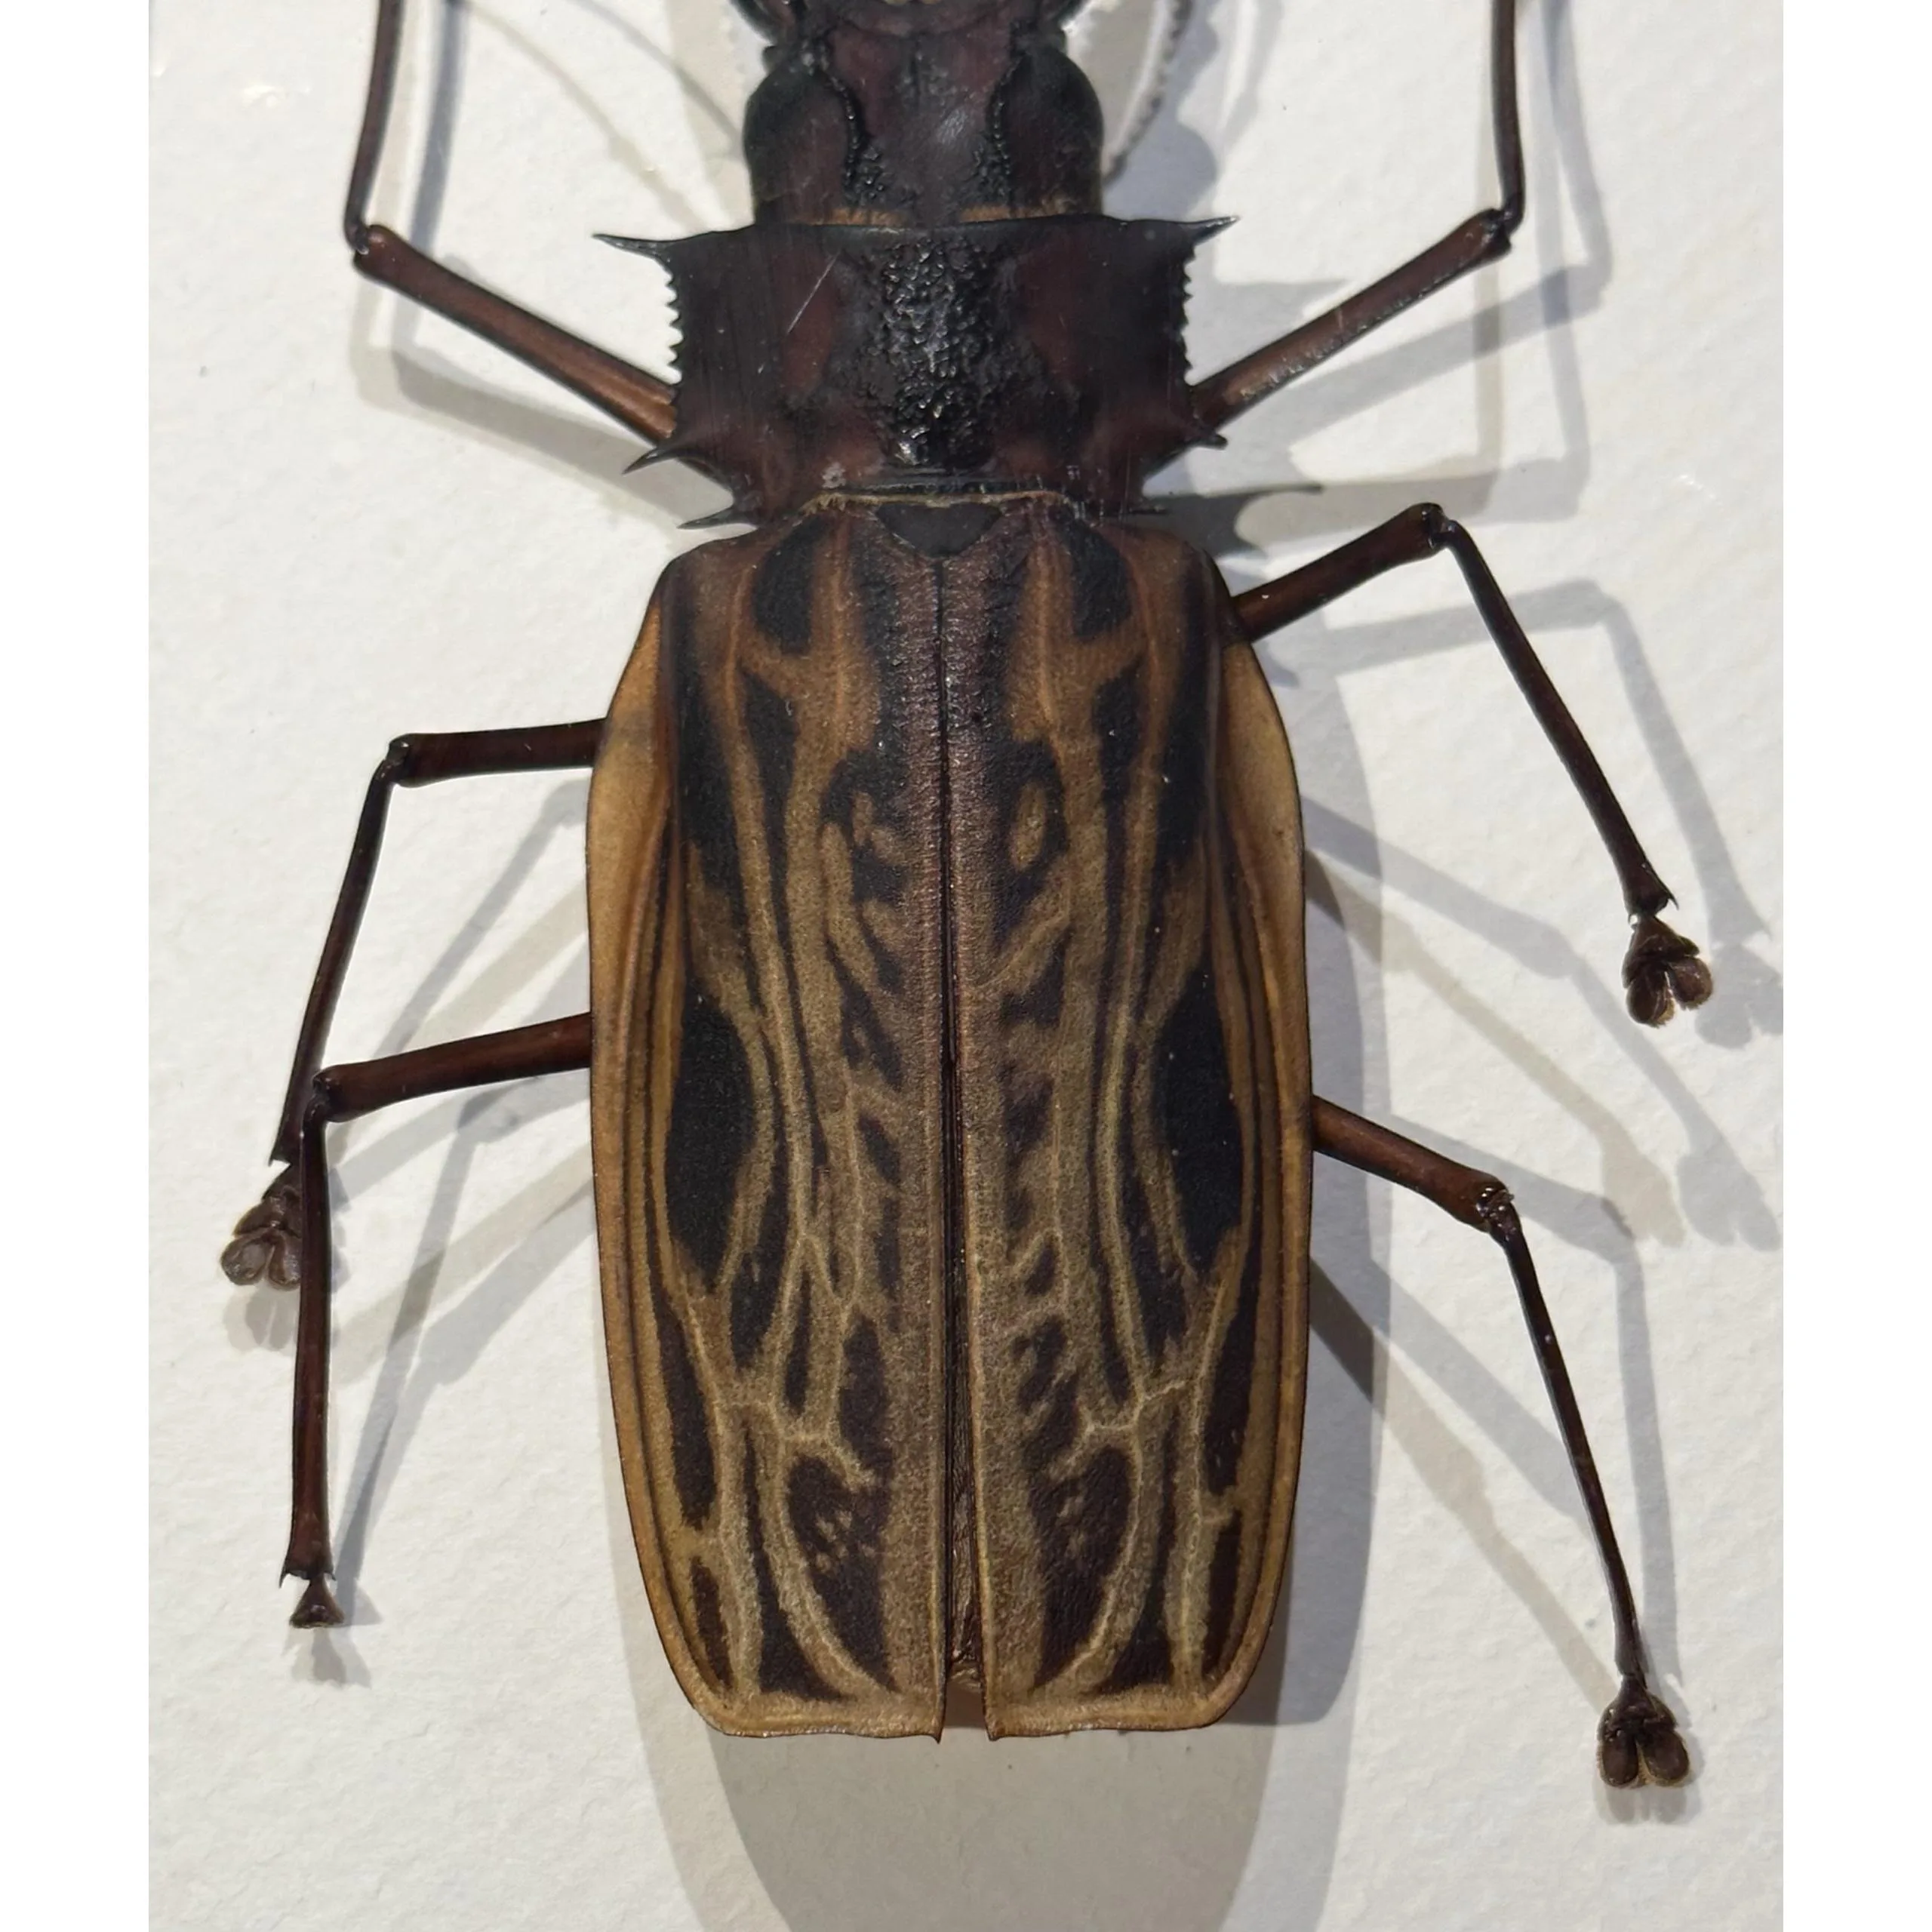 Huge Sabertooth Stag Beetle professionally framed Prehistoric Online